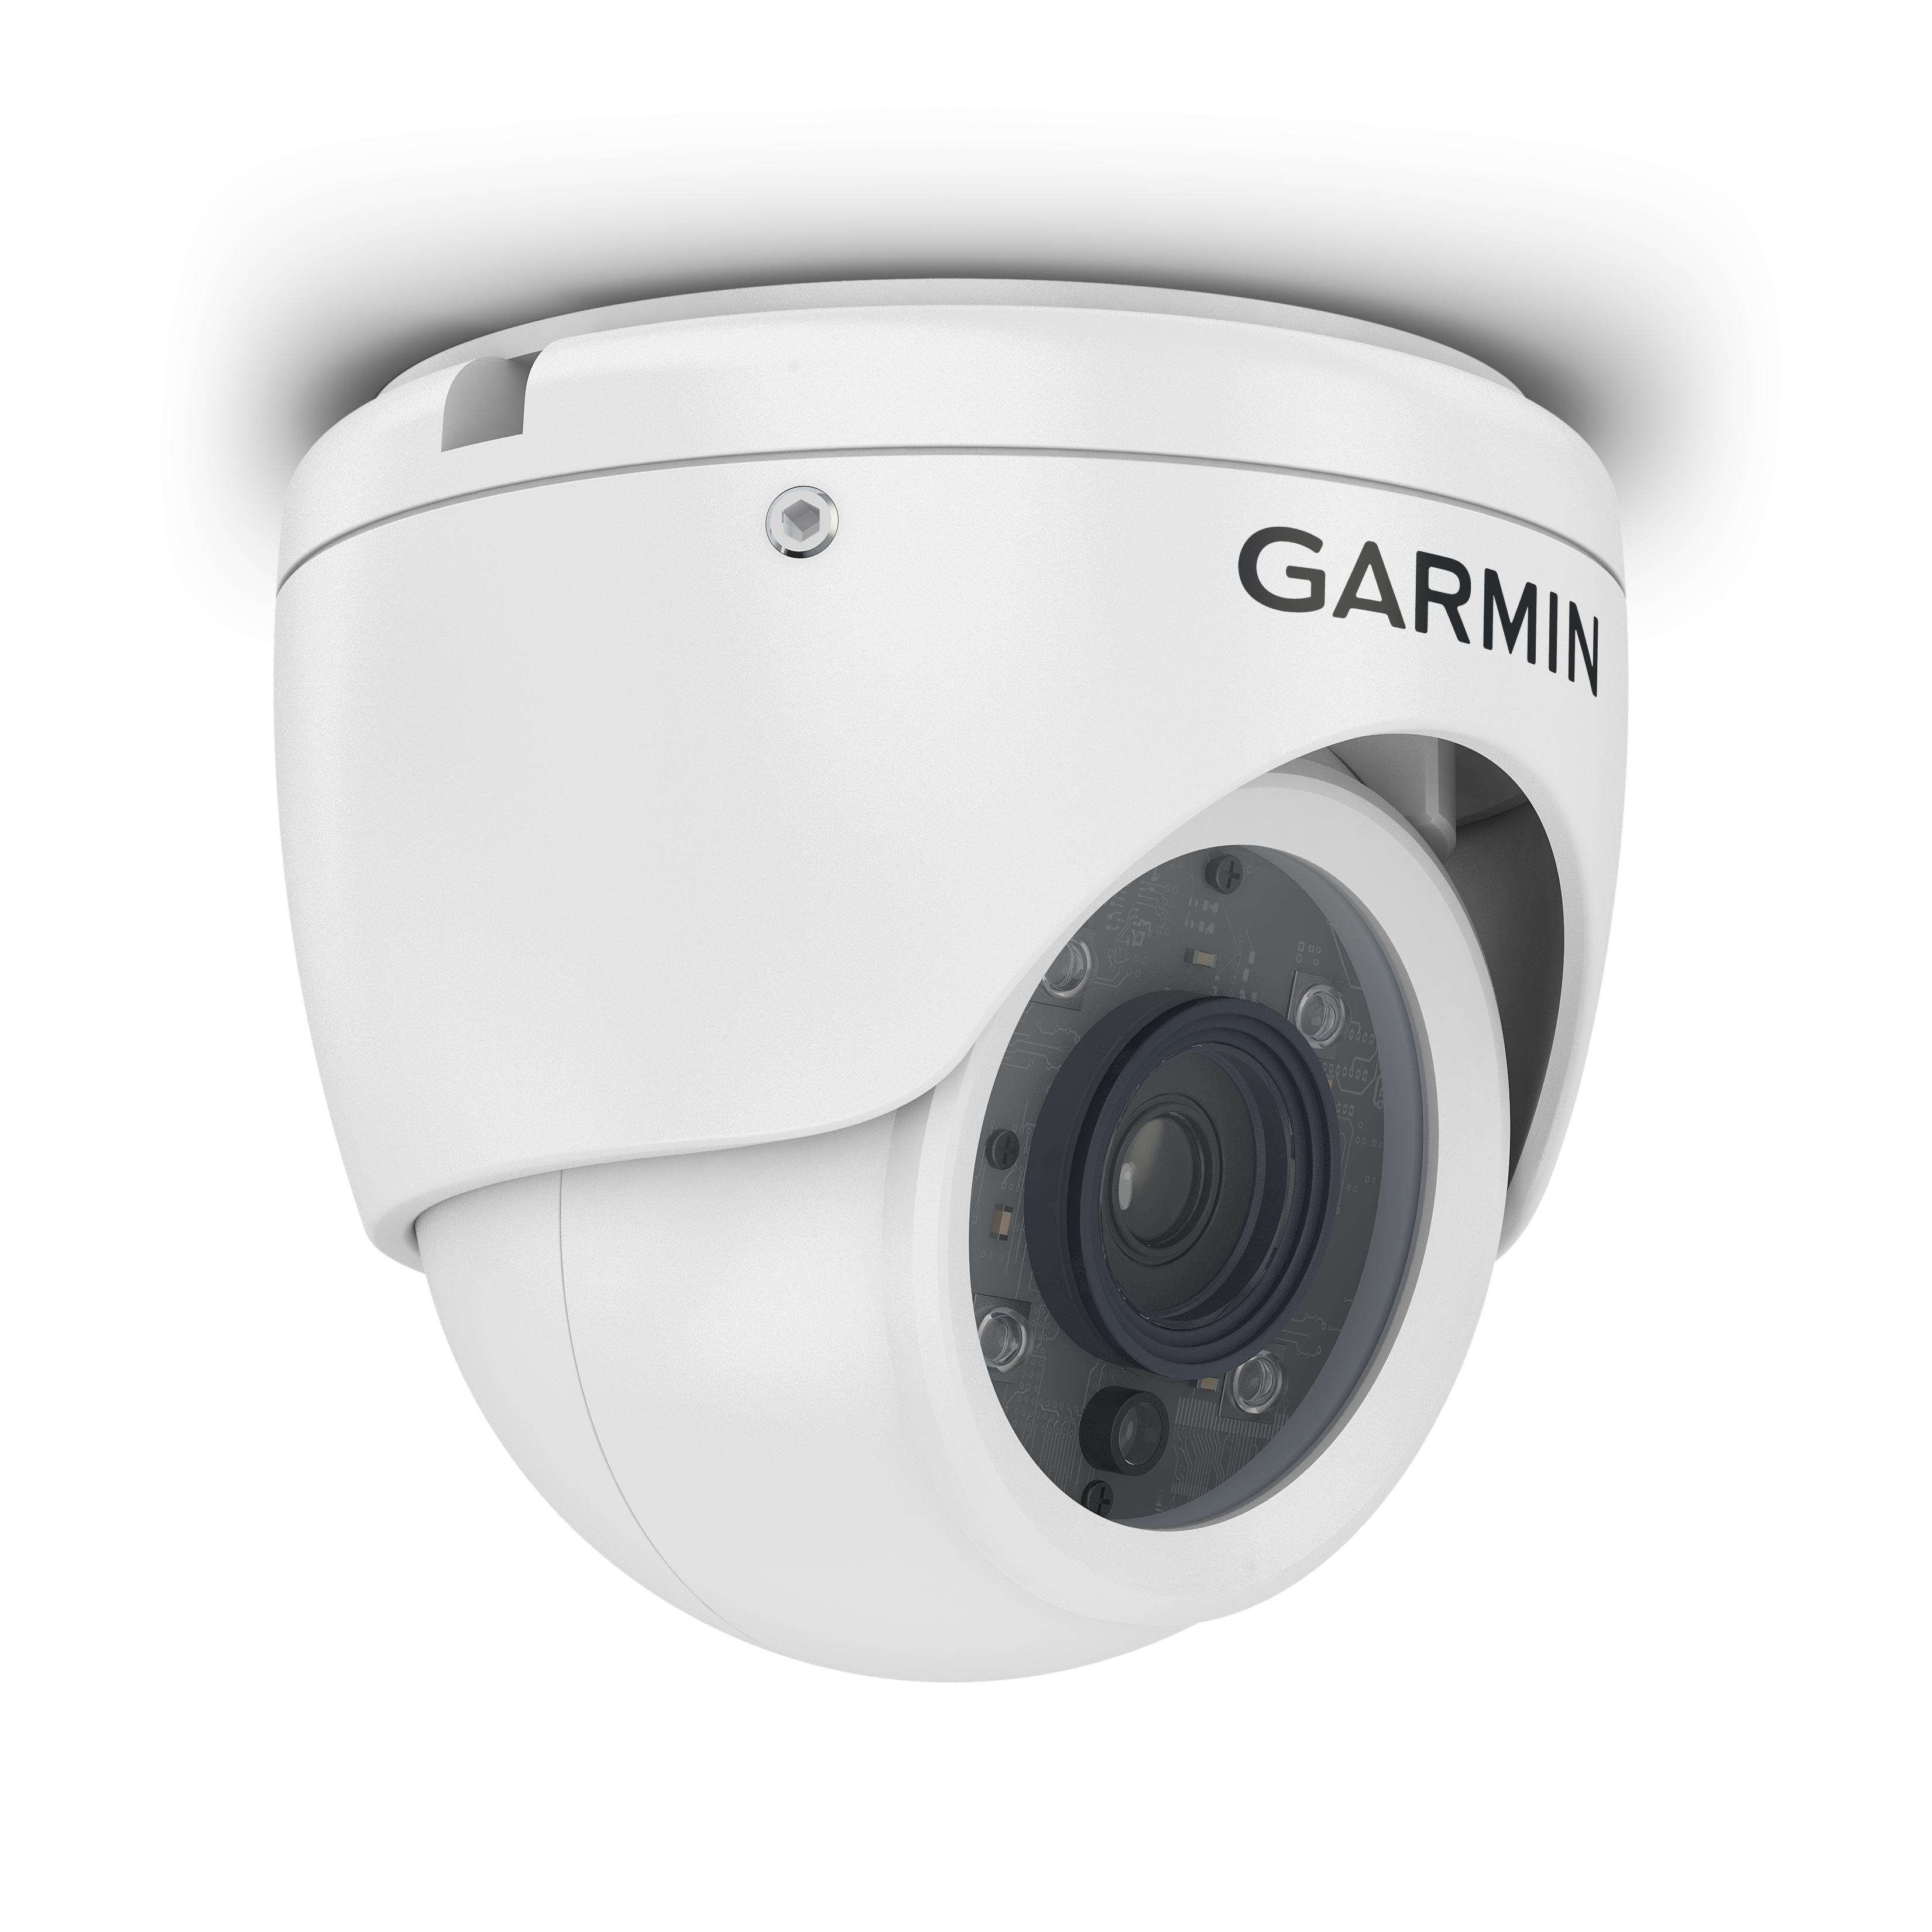 garmin gc 200 marine ip camera right